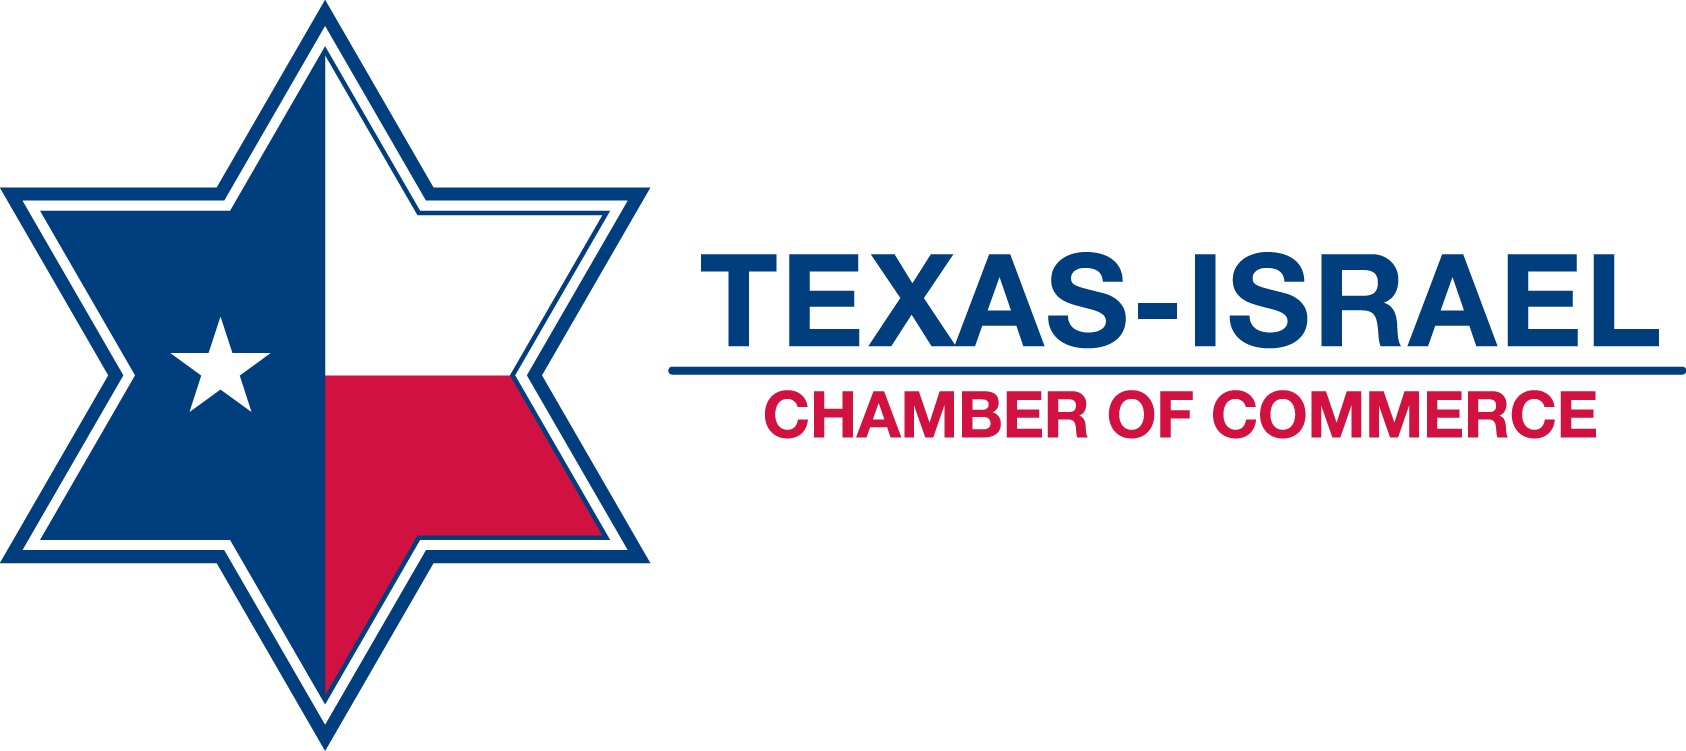 Texas Israel Chamber of Commerce